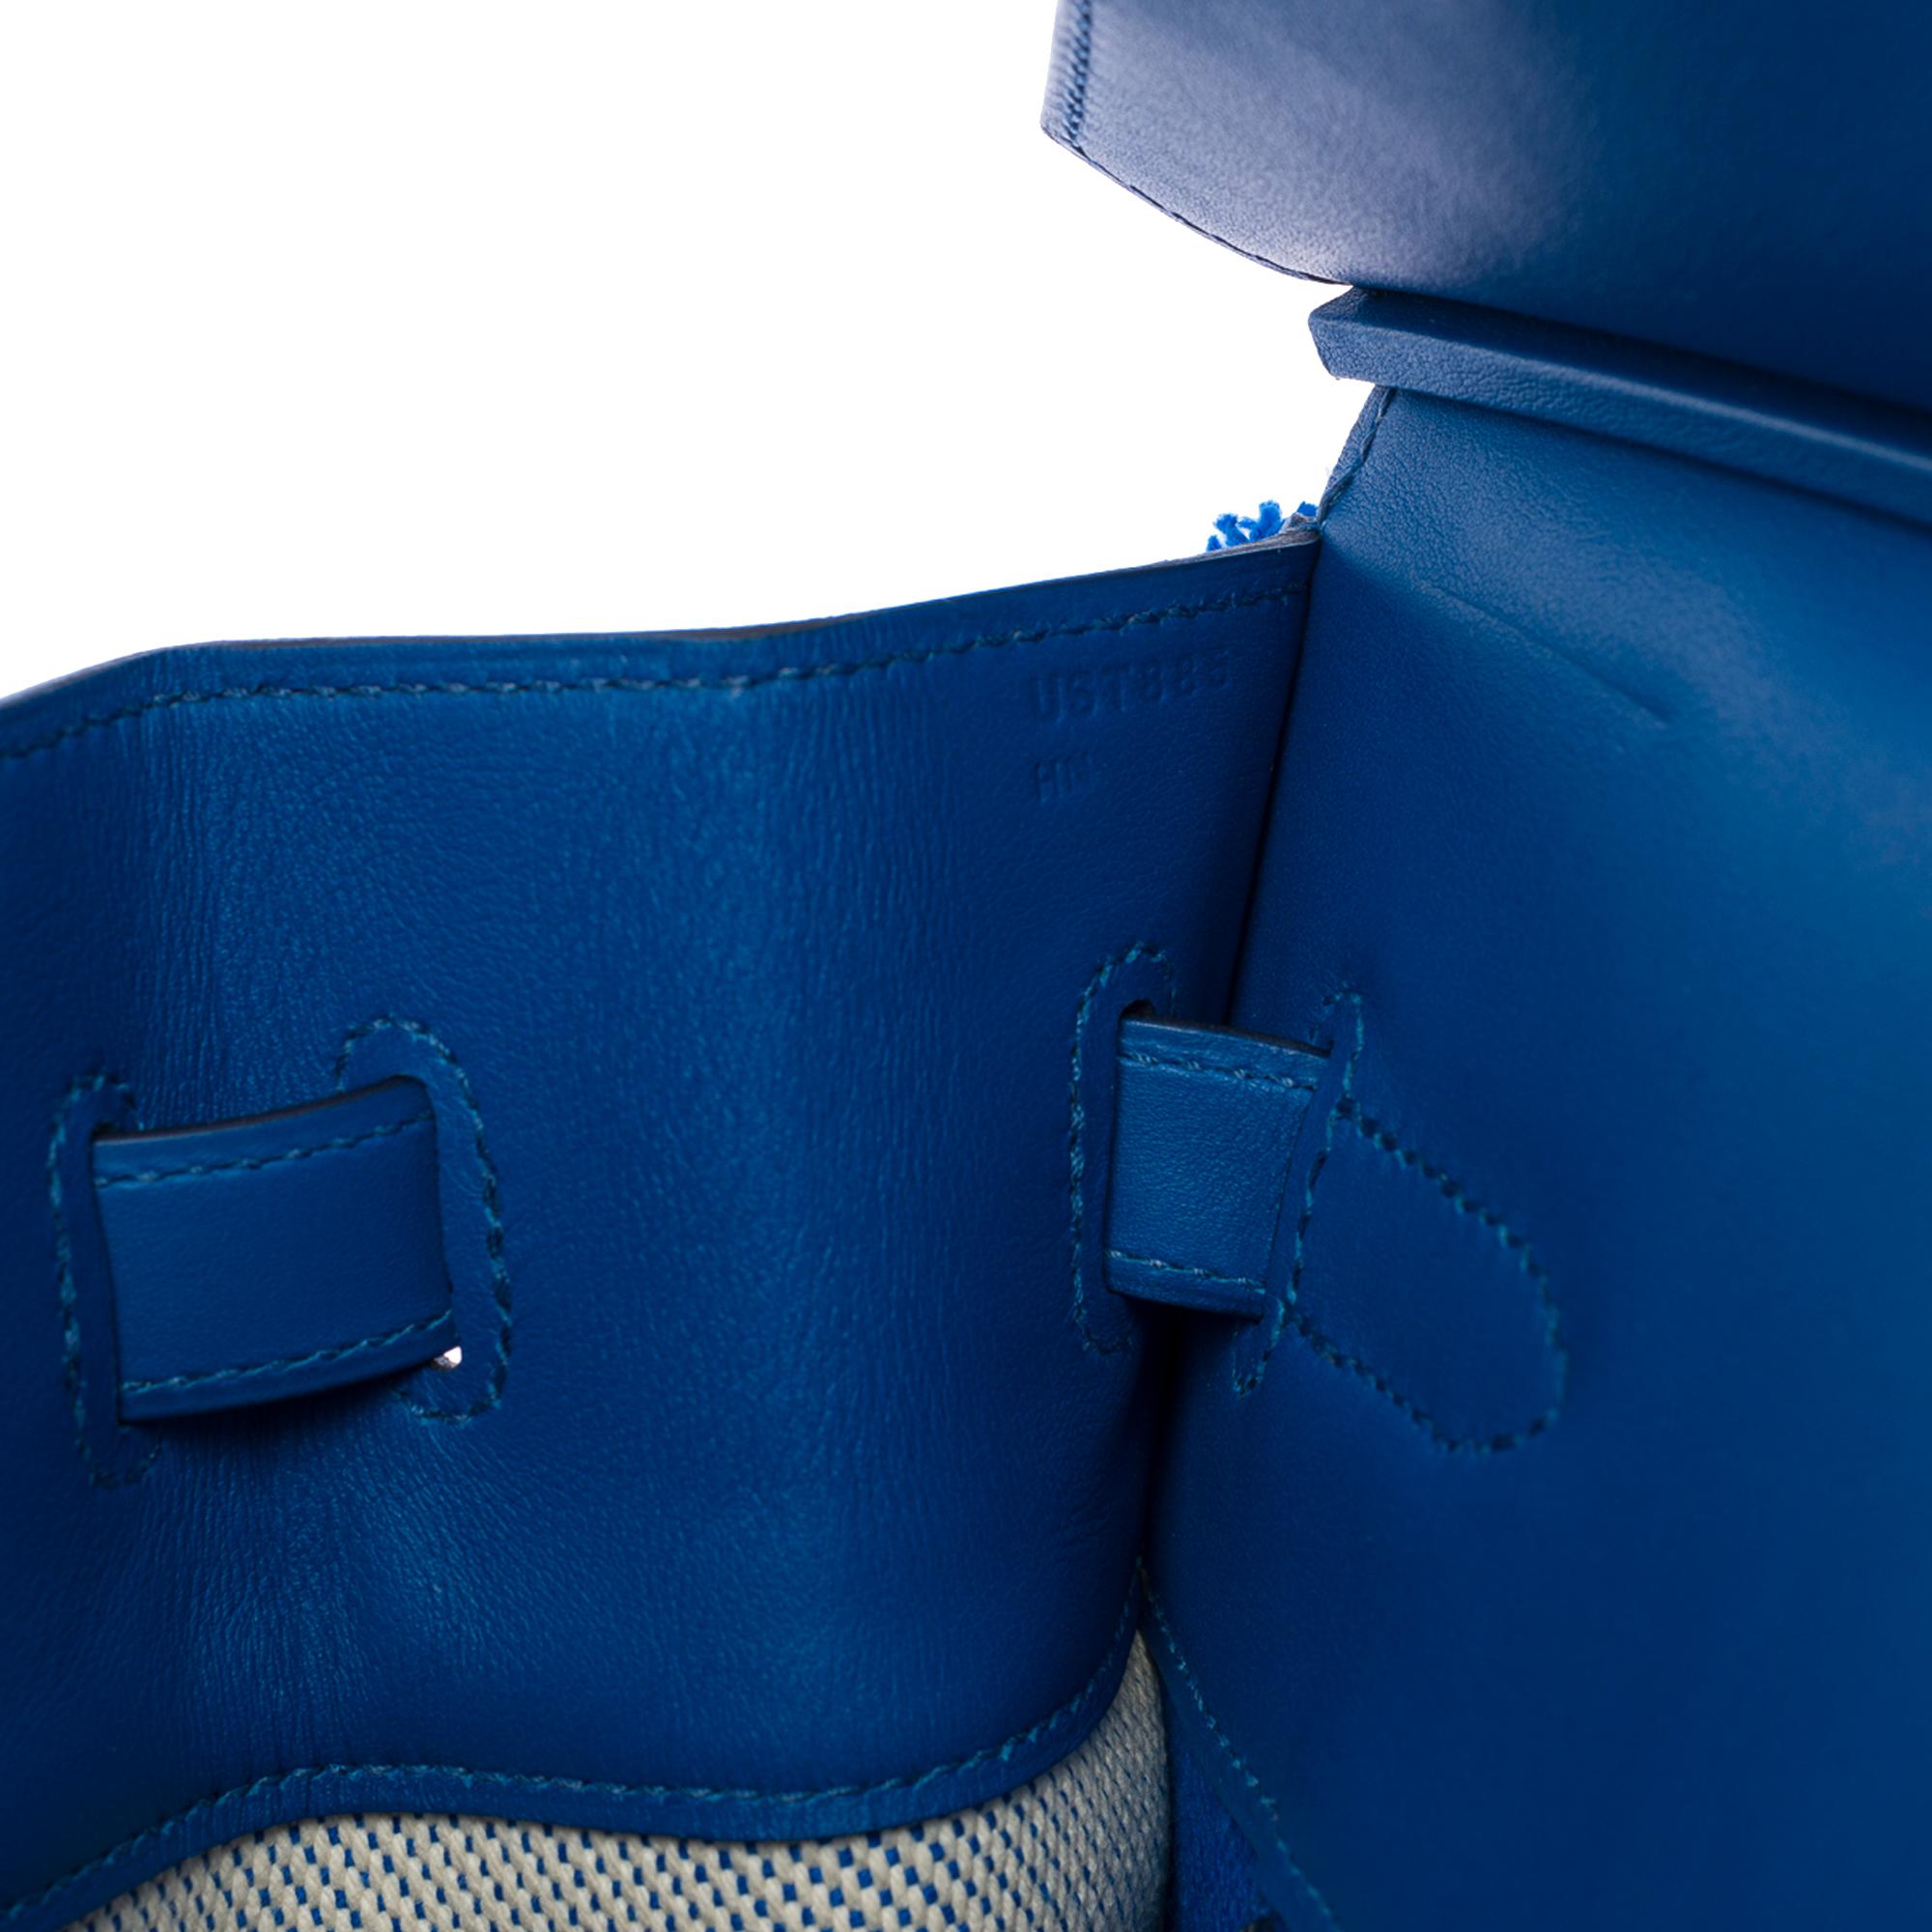 New Fray Fray Hermès Birkin 35 handbag in beige canvas/blue swift leather, SHW 1